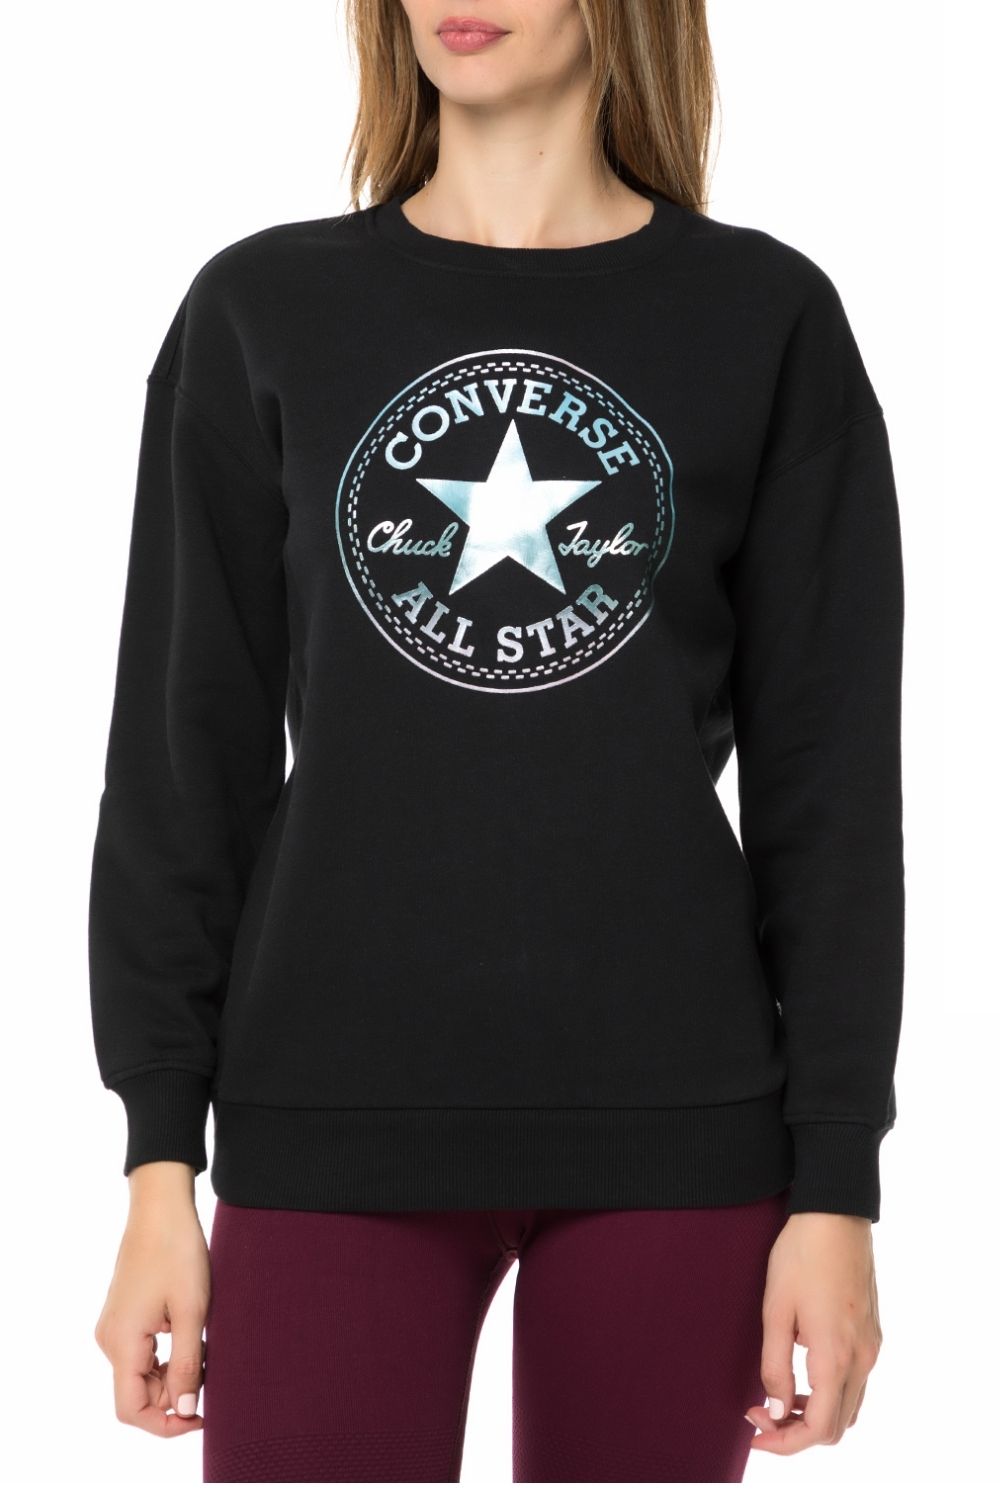 CONVERSE – Γυναικεία φούτερ μπλούζα CONVERSE Shine Pack Graphic μαύρη 1554054.0-7172